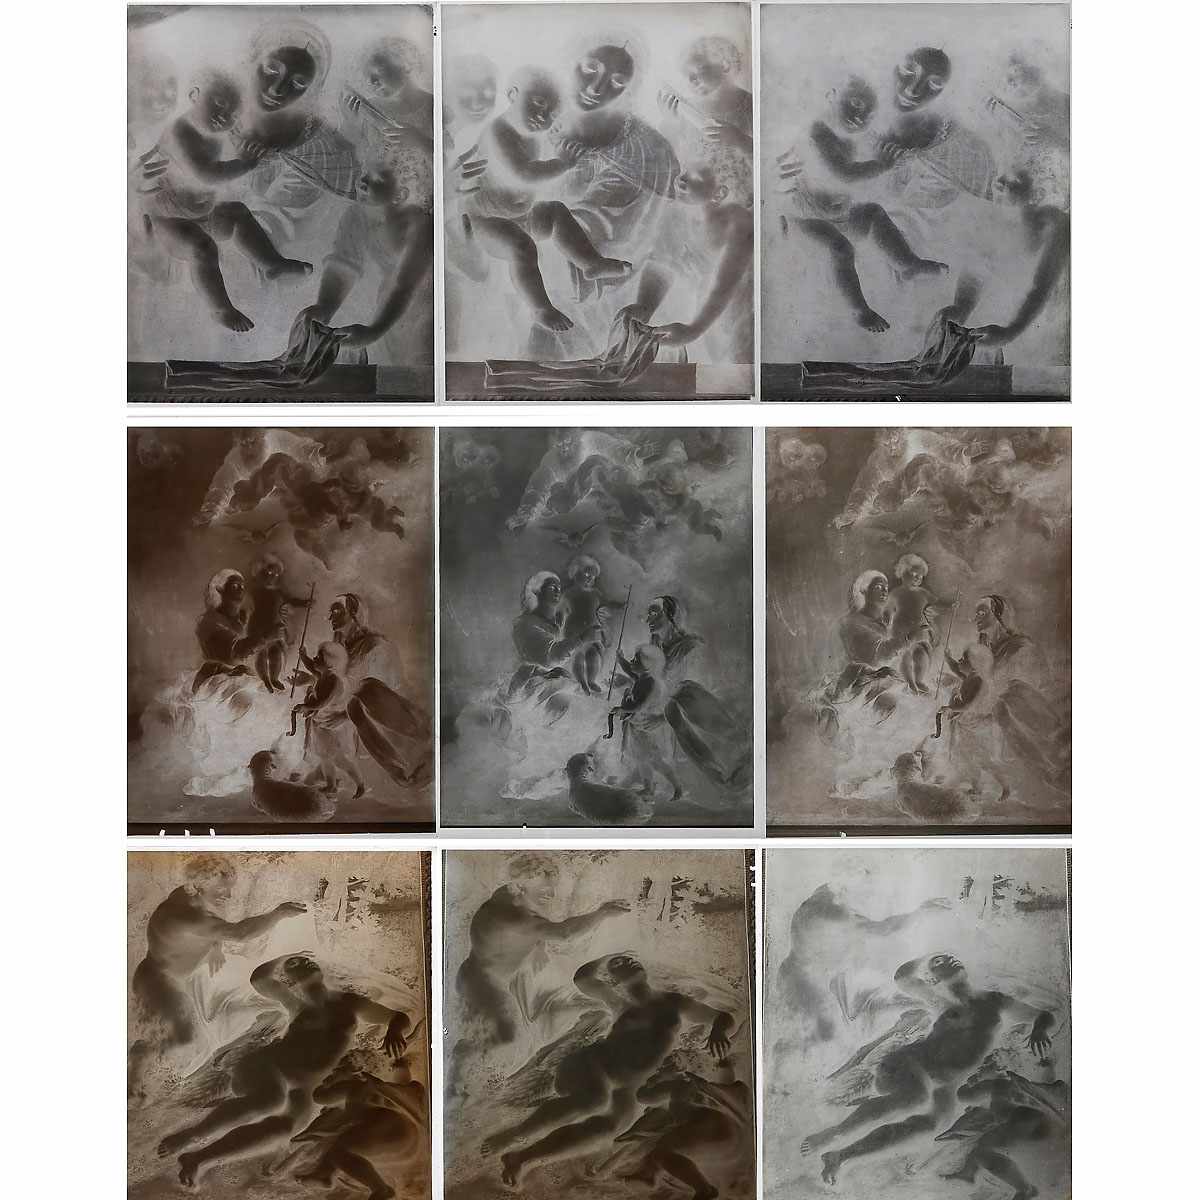 3 x Three-Color Negatives (18 x 24 cm) after Adolf Miethe, c. 1910-20 3 x three-color glass-plate